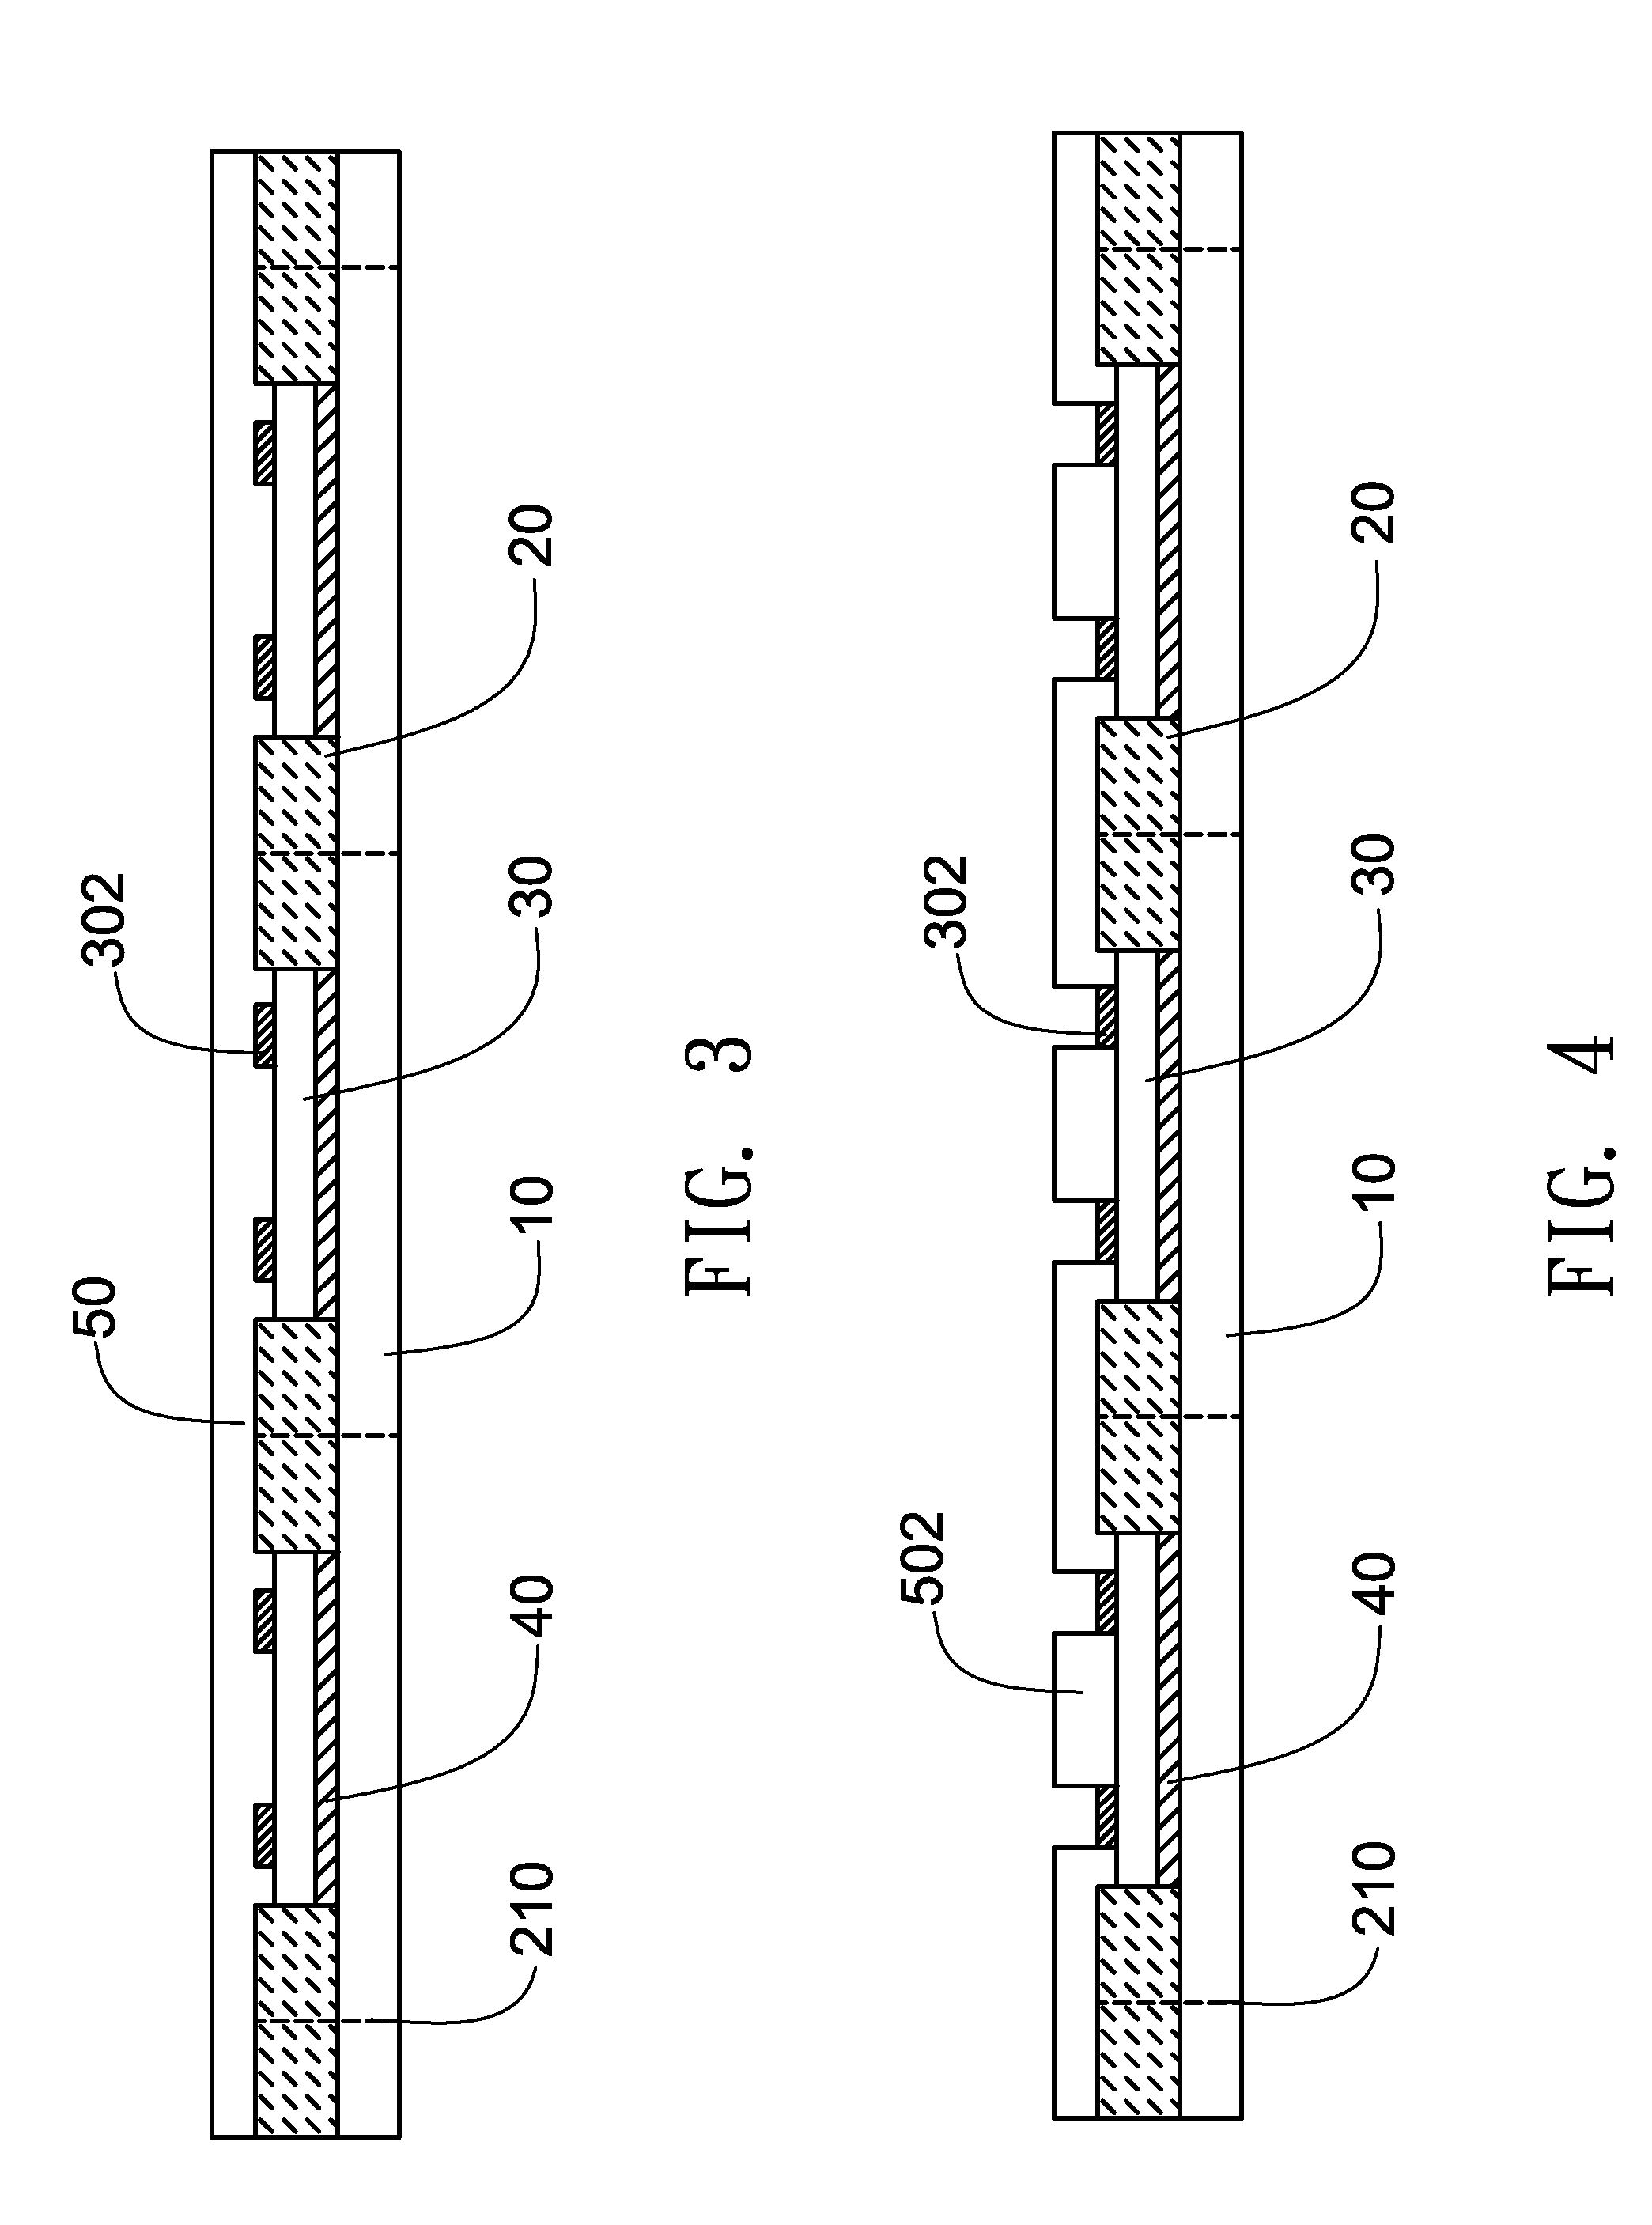 Method of die rearrangement package structure having patterned under bump metallurgic layer connecting metal lead